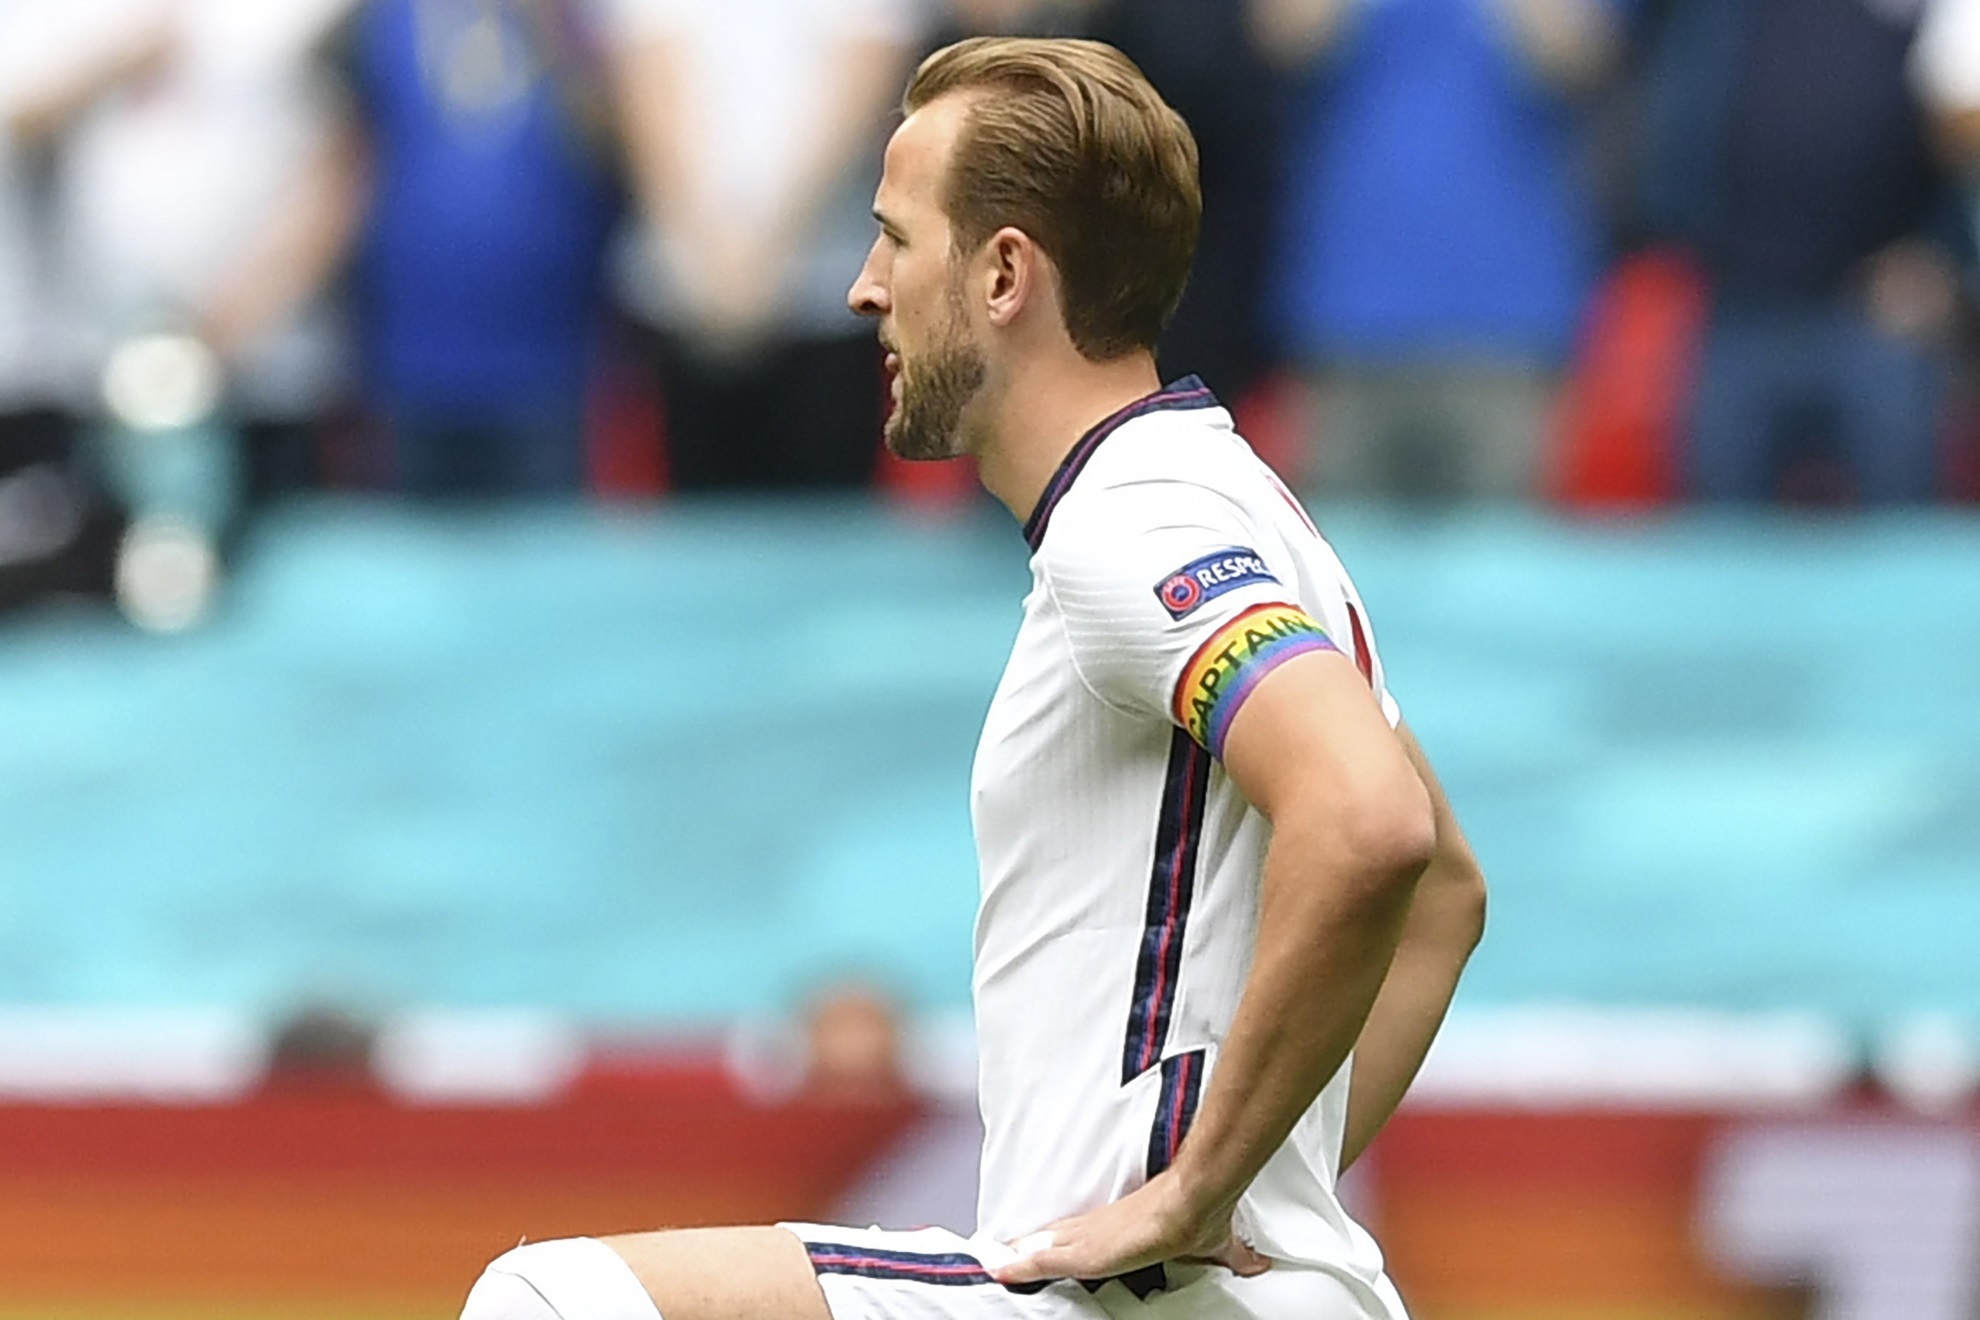 Harry Kane FIFA Qatar World Cup 2022 Rainbow Armband Dispute Soccer Euro 2020 championship